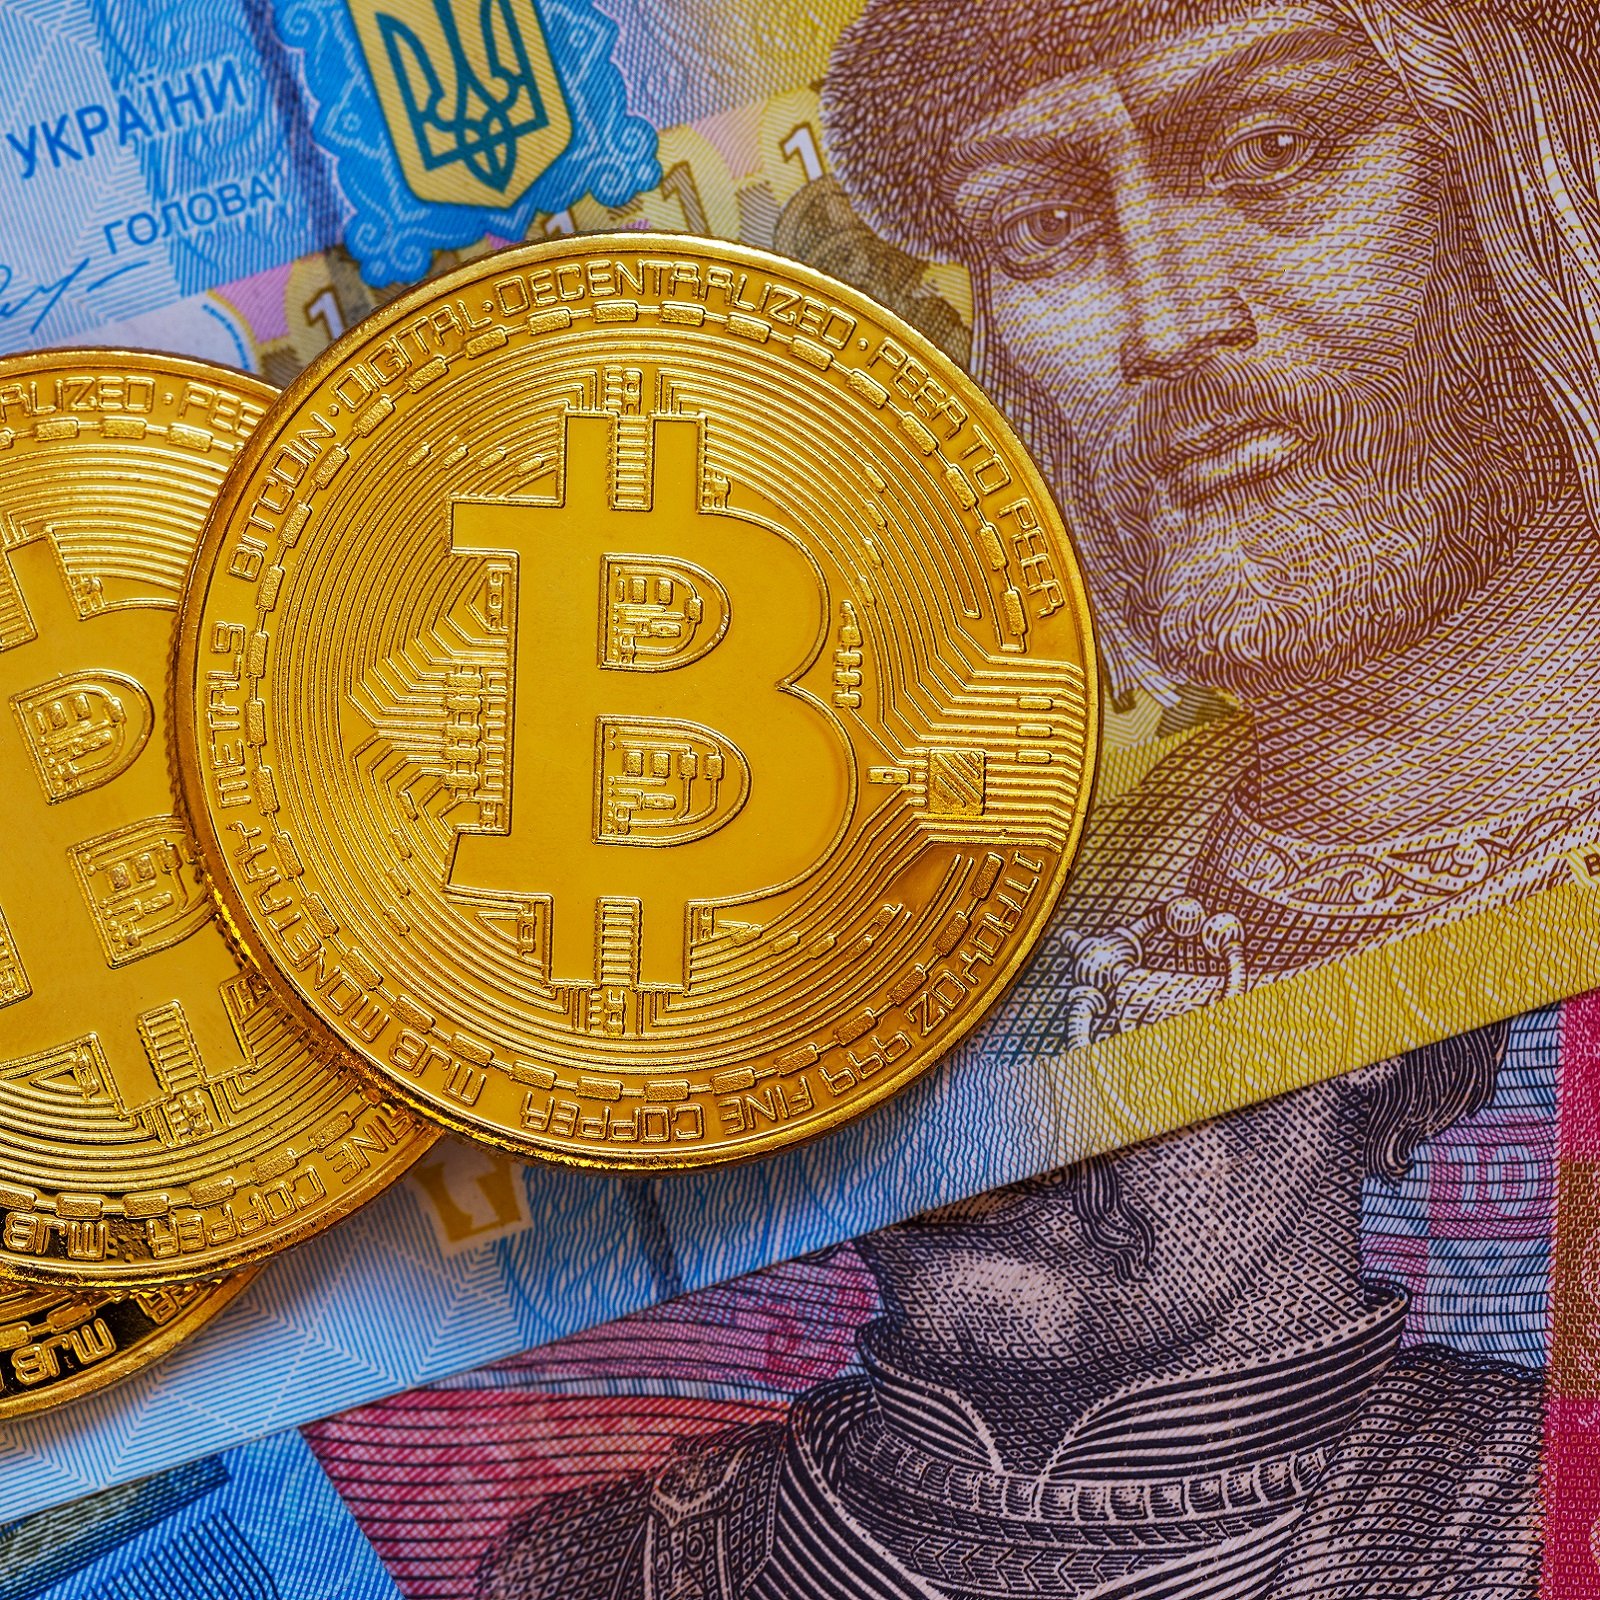 Calls for “Legal Bitcoin” in Ukraine, as Natsbank Mulls E-Fiat